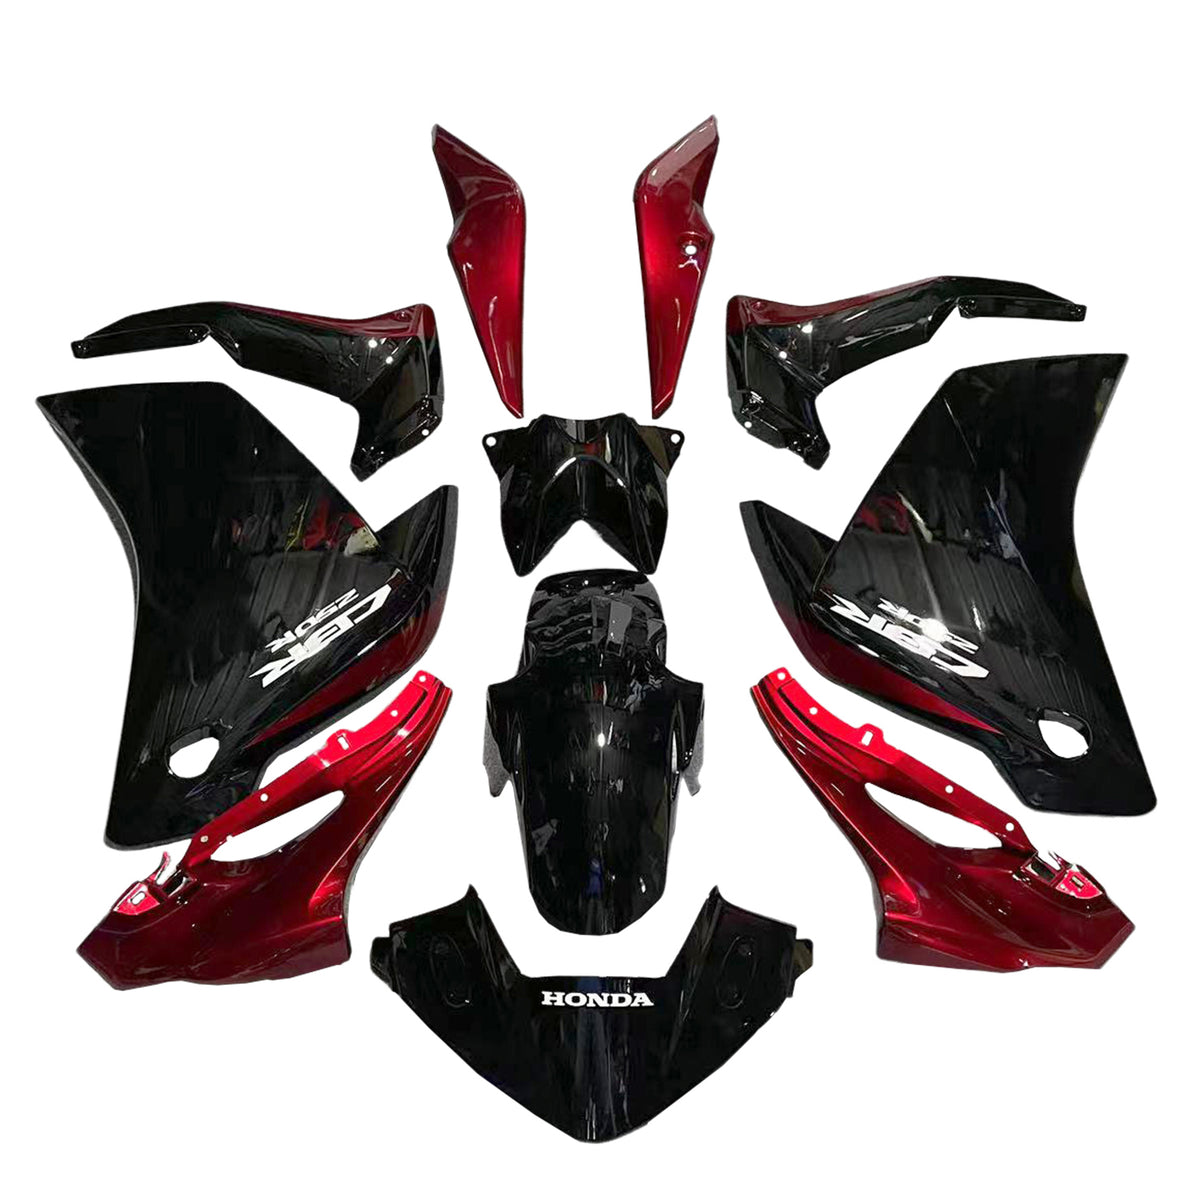 Amotopart Kit carena Honda CBR250R 2011-2013 nero lucido e rosso